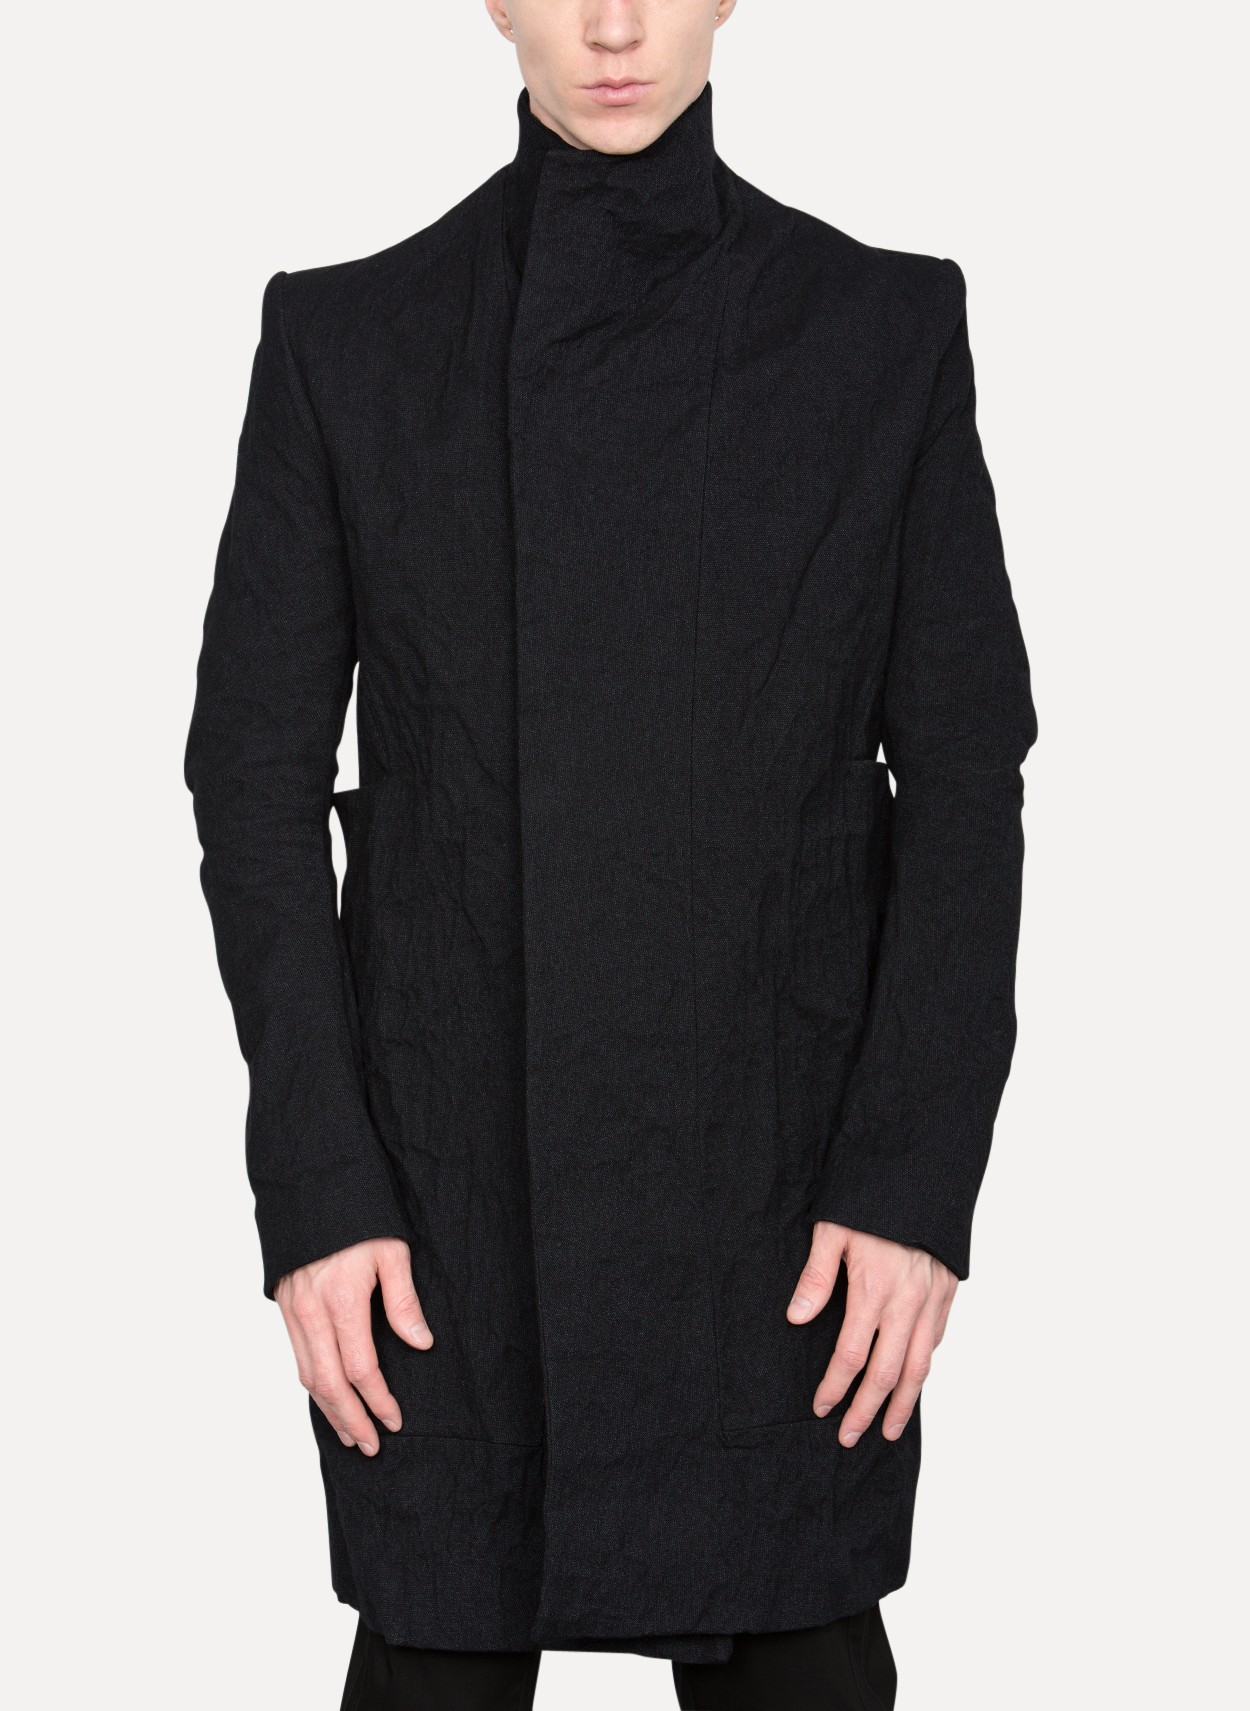 Lyst - Obscur Aluminum/wool Coat in Black for Men